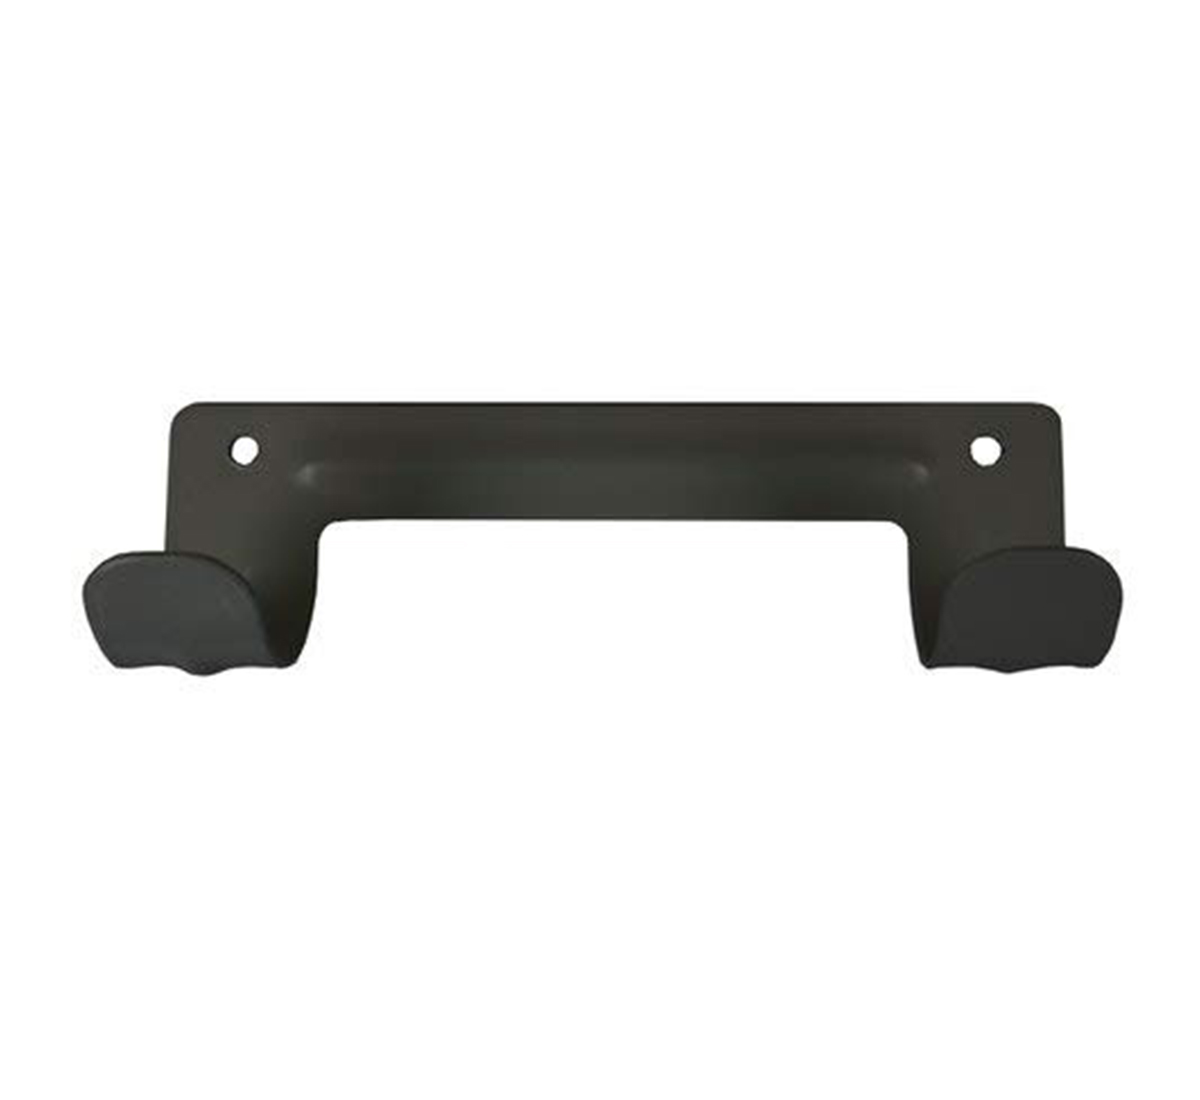 Black PBT iron board holder stand